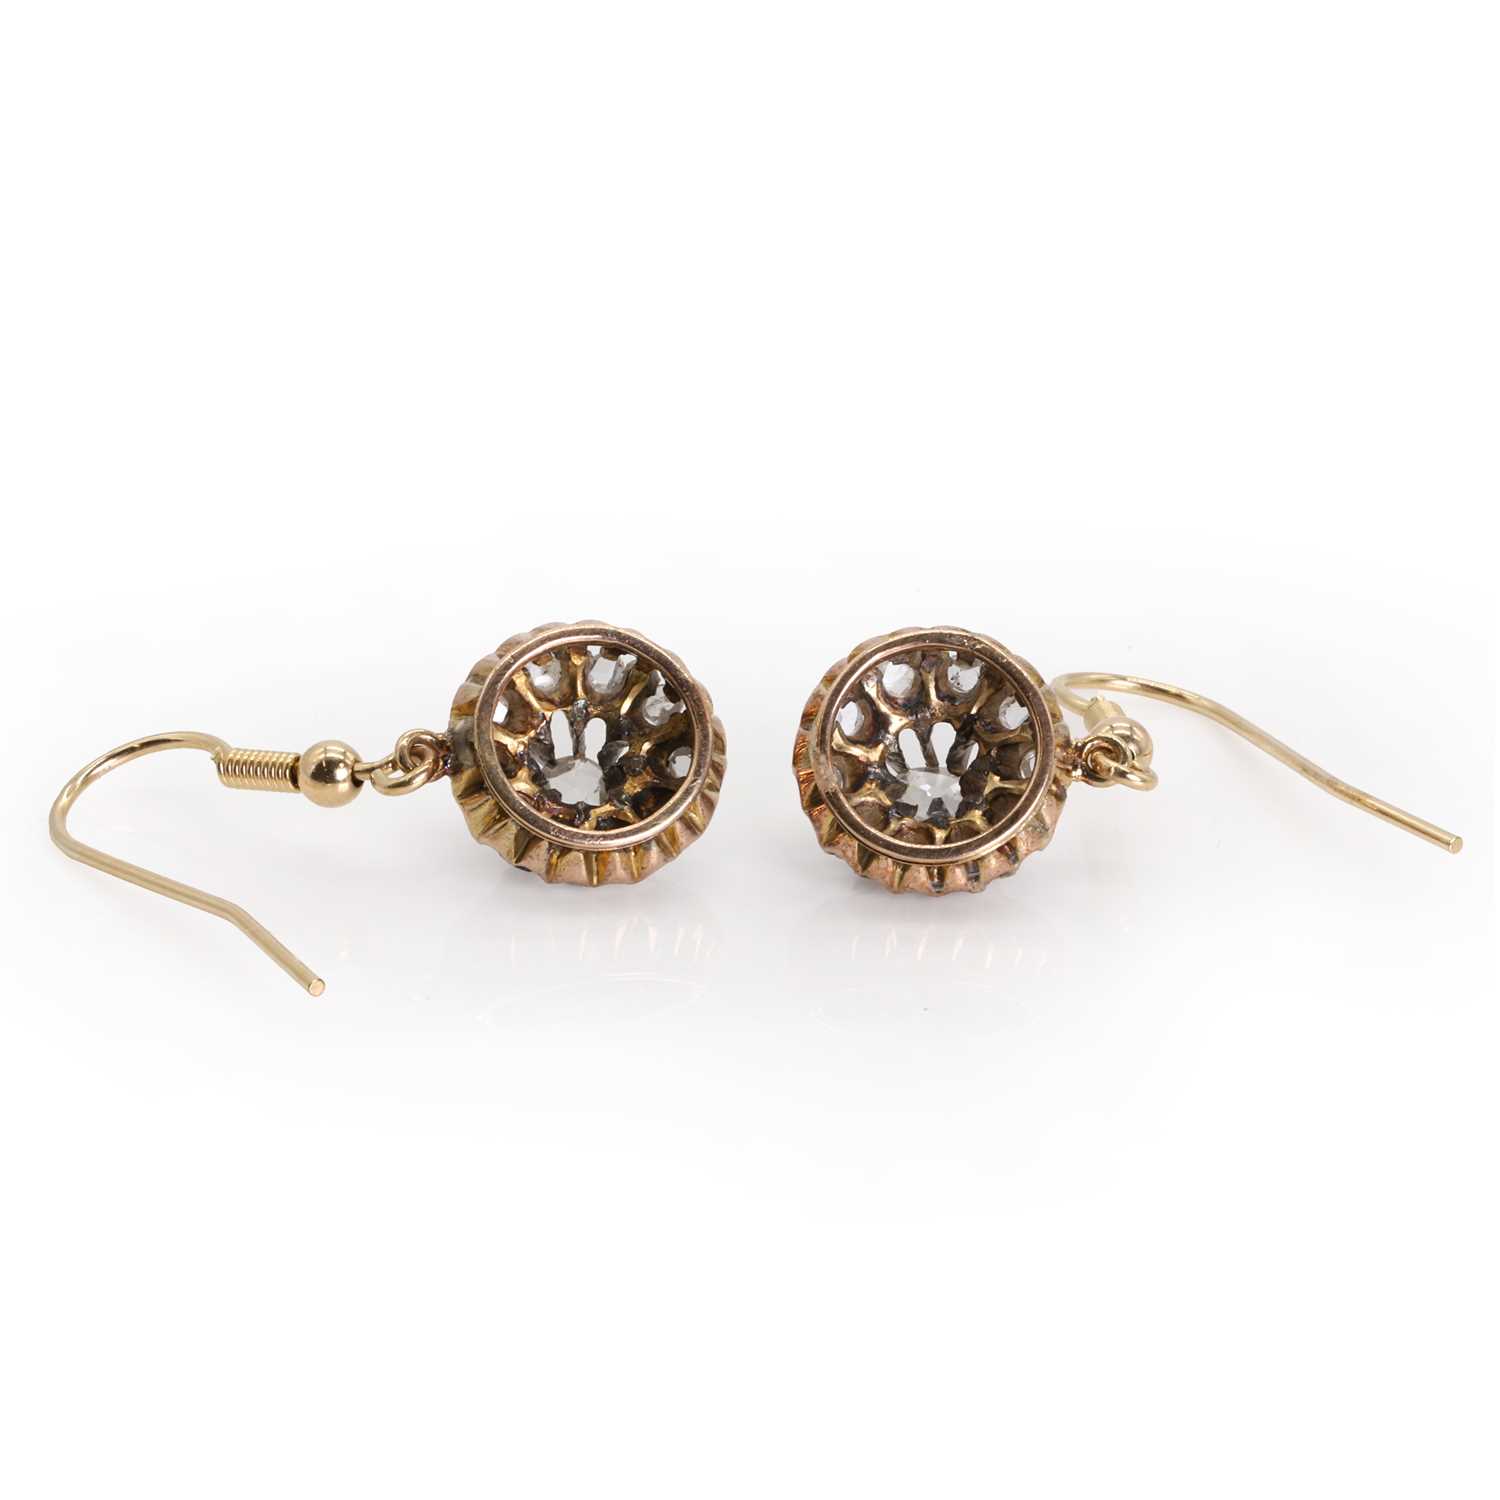 A pair of Edwardian diamond cluster drop earrings, c.1900, - Image 2 of 2